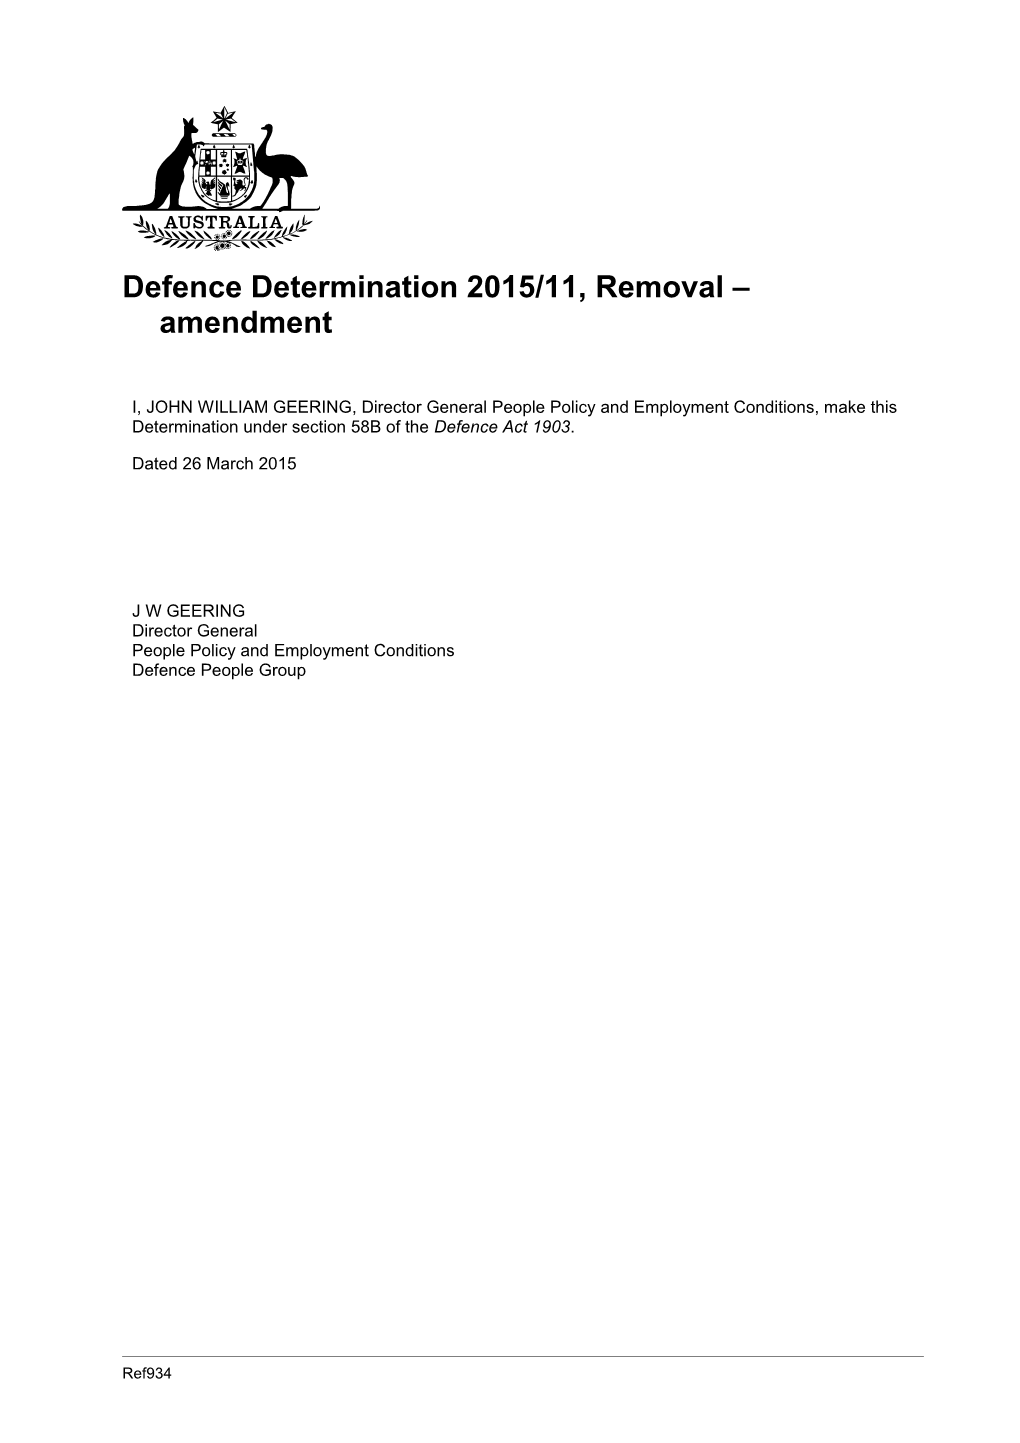 Defence Determination 2015/11, Removal Amendment